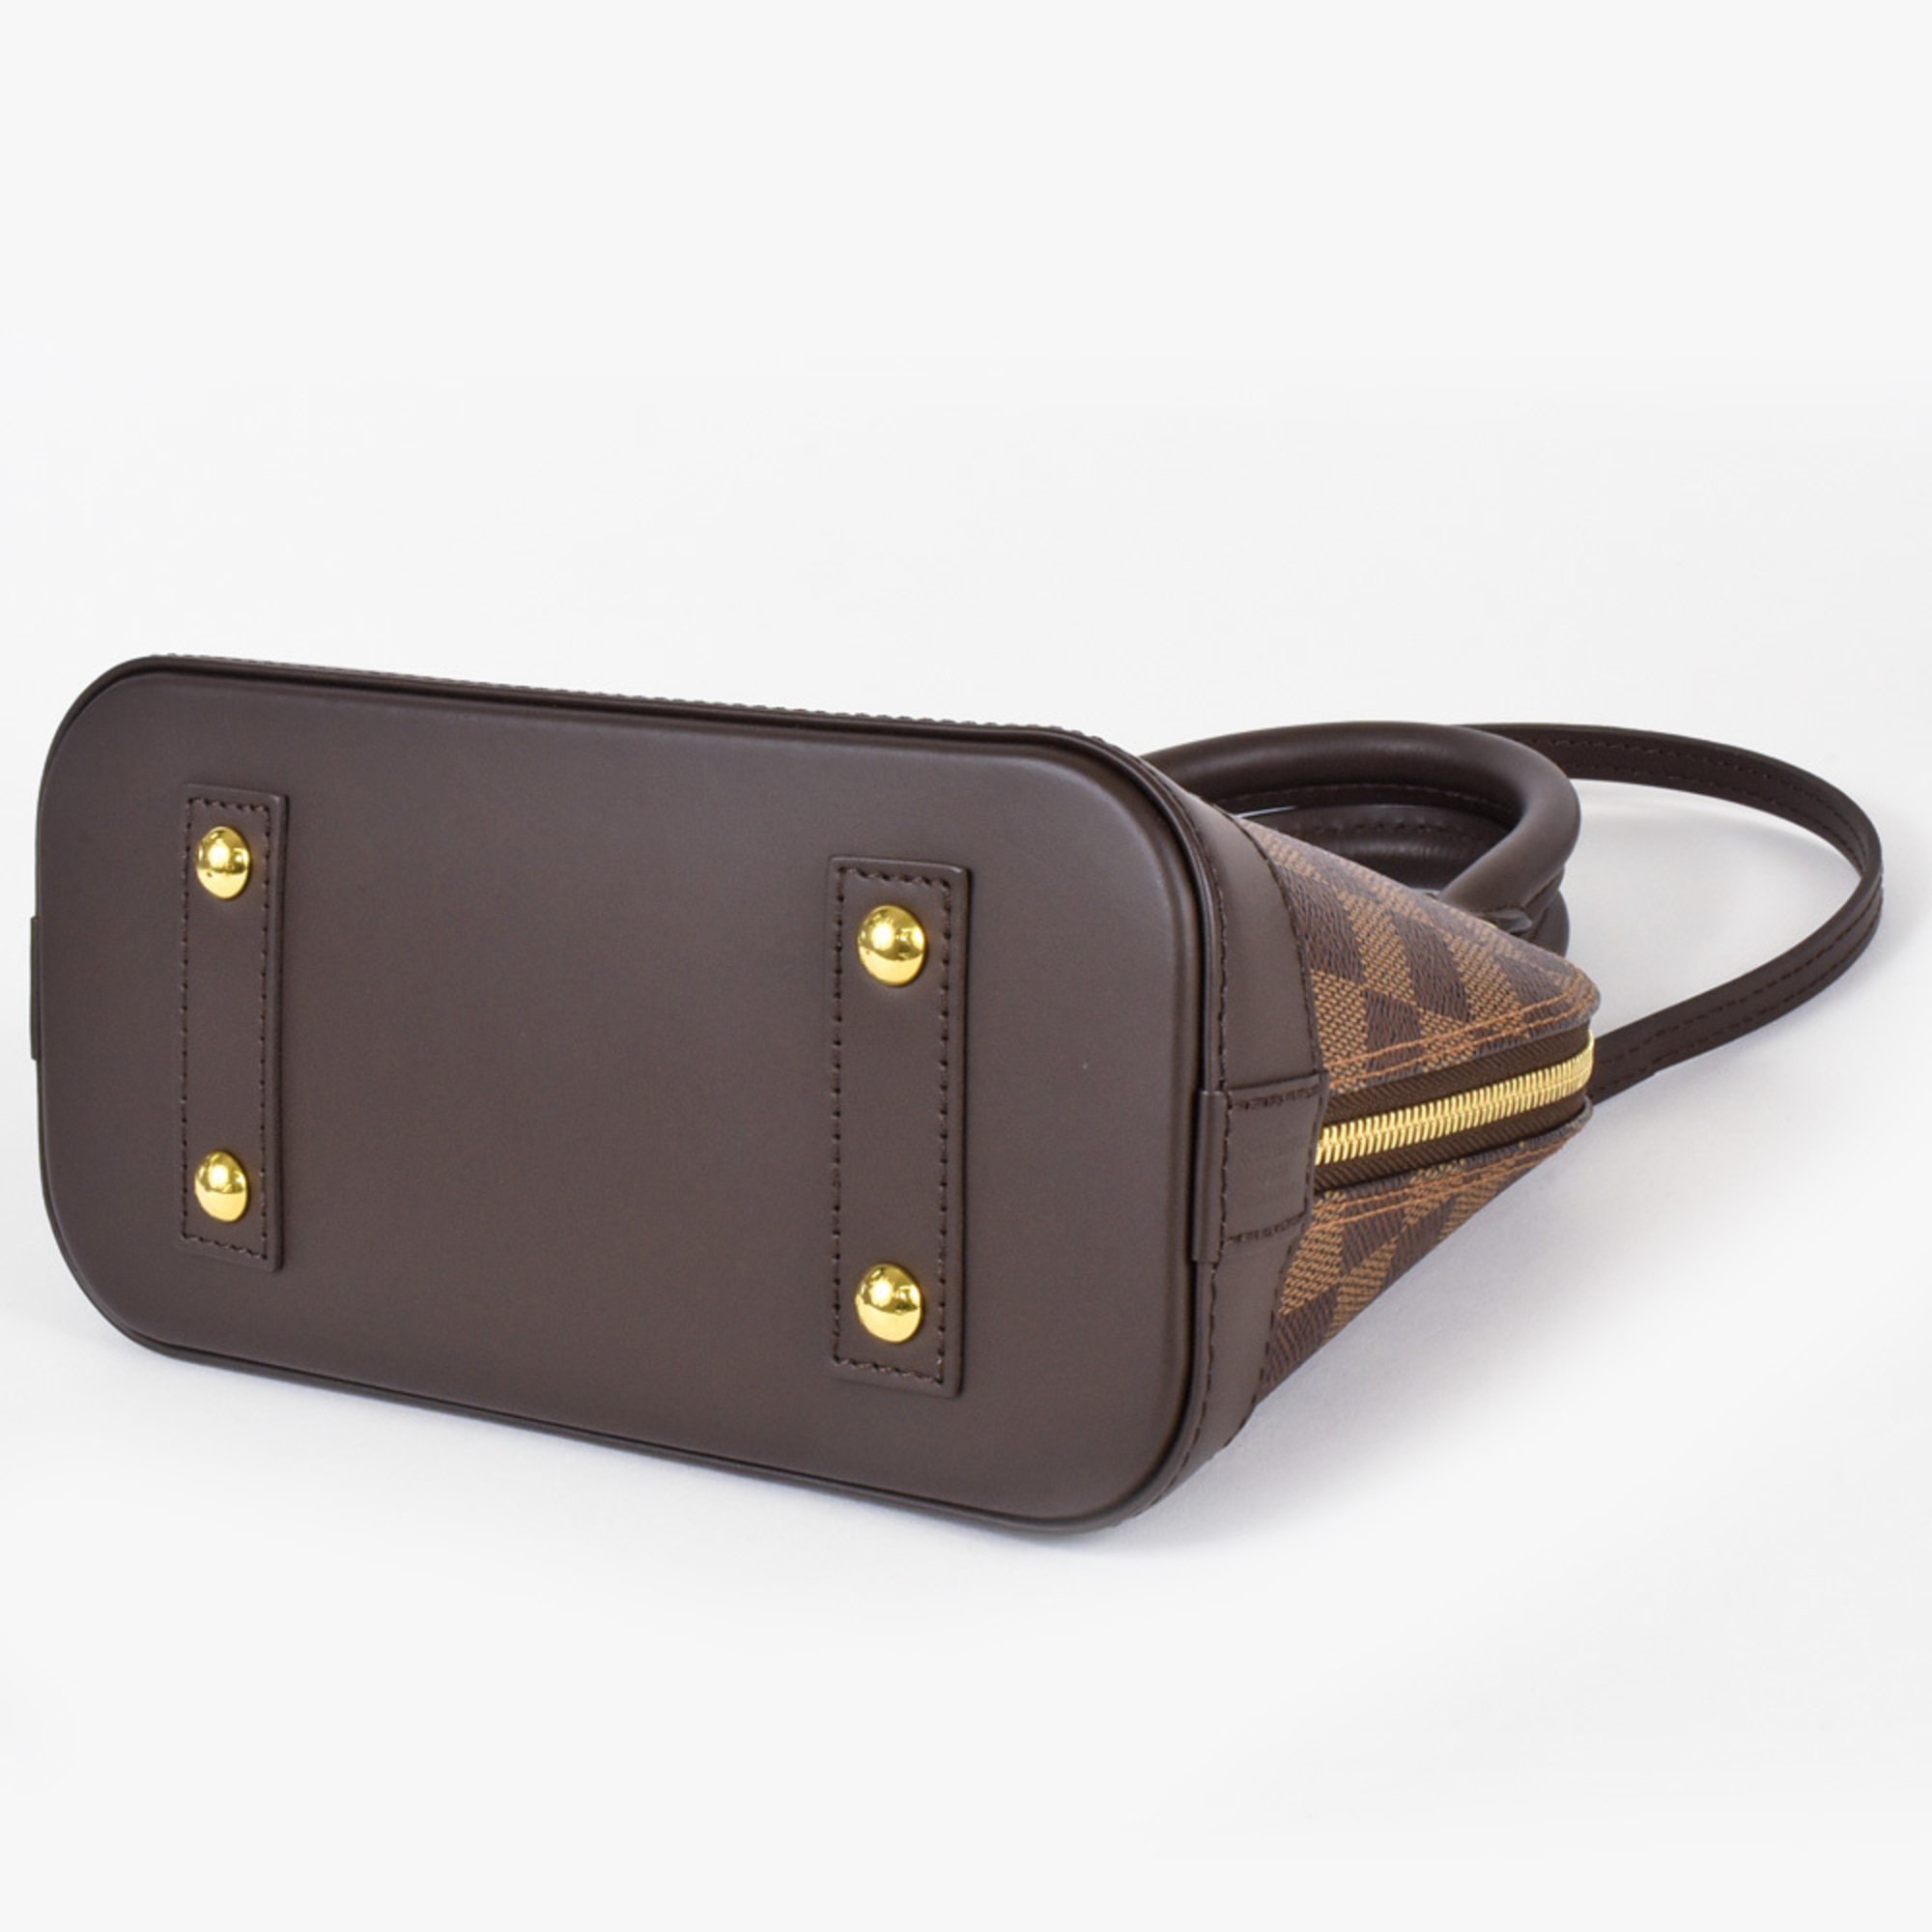 Louis Vuitton Alma BB Handbag Damier Ebene N41221 RFID